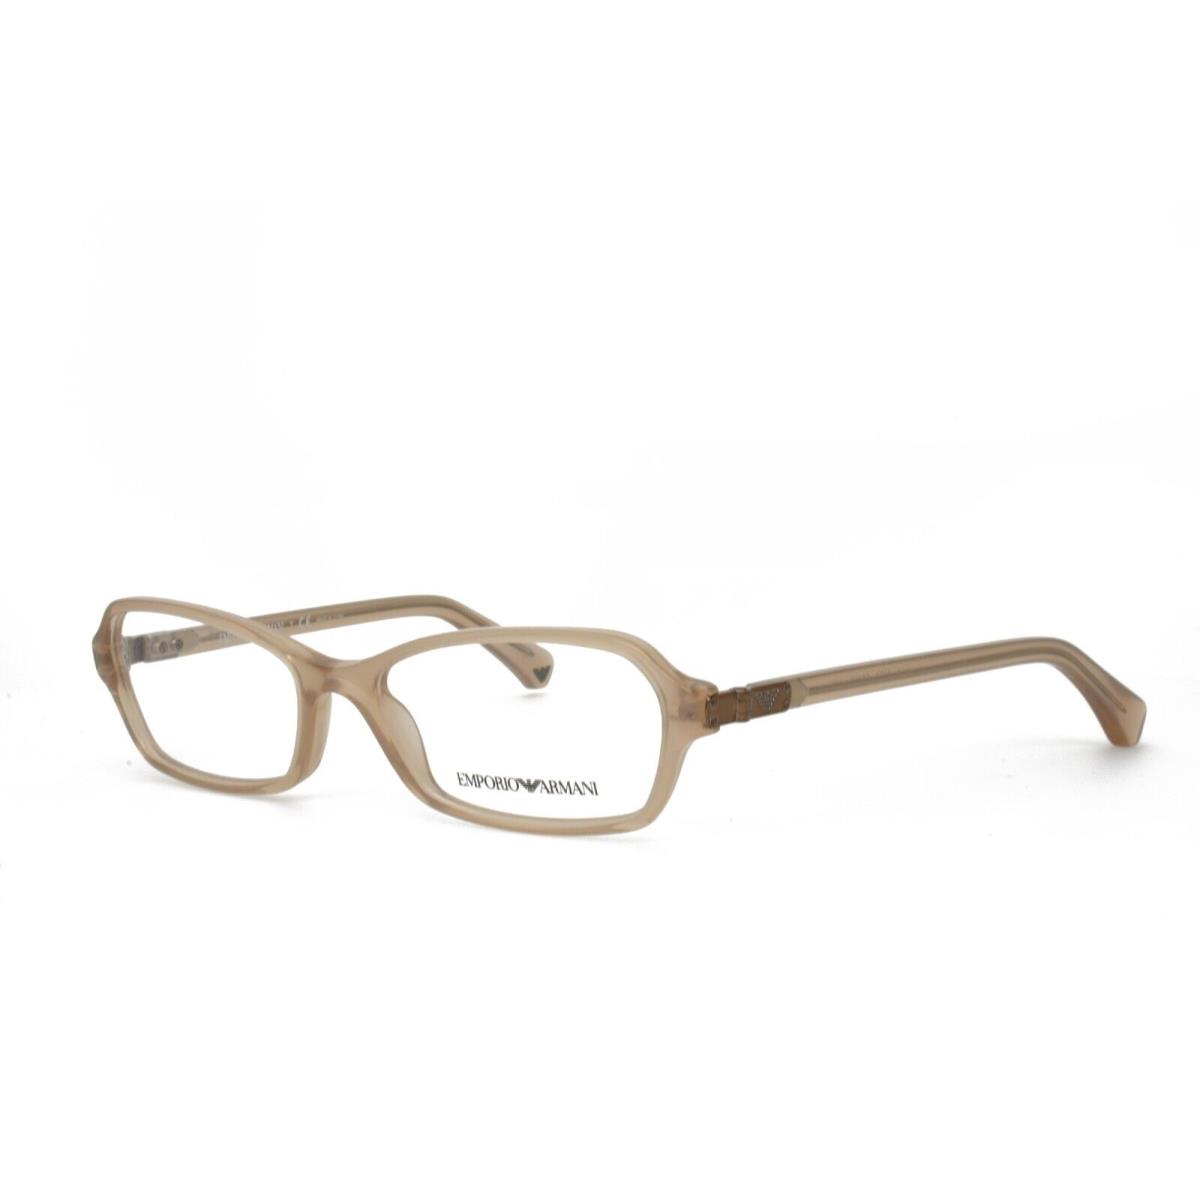 Emporio Armani 3009 5084 52-16-135 Gray Eyeglasses Frames